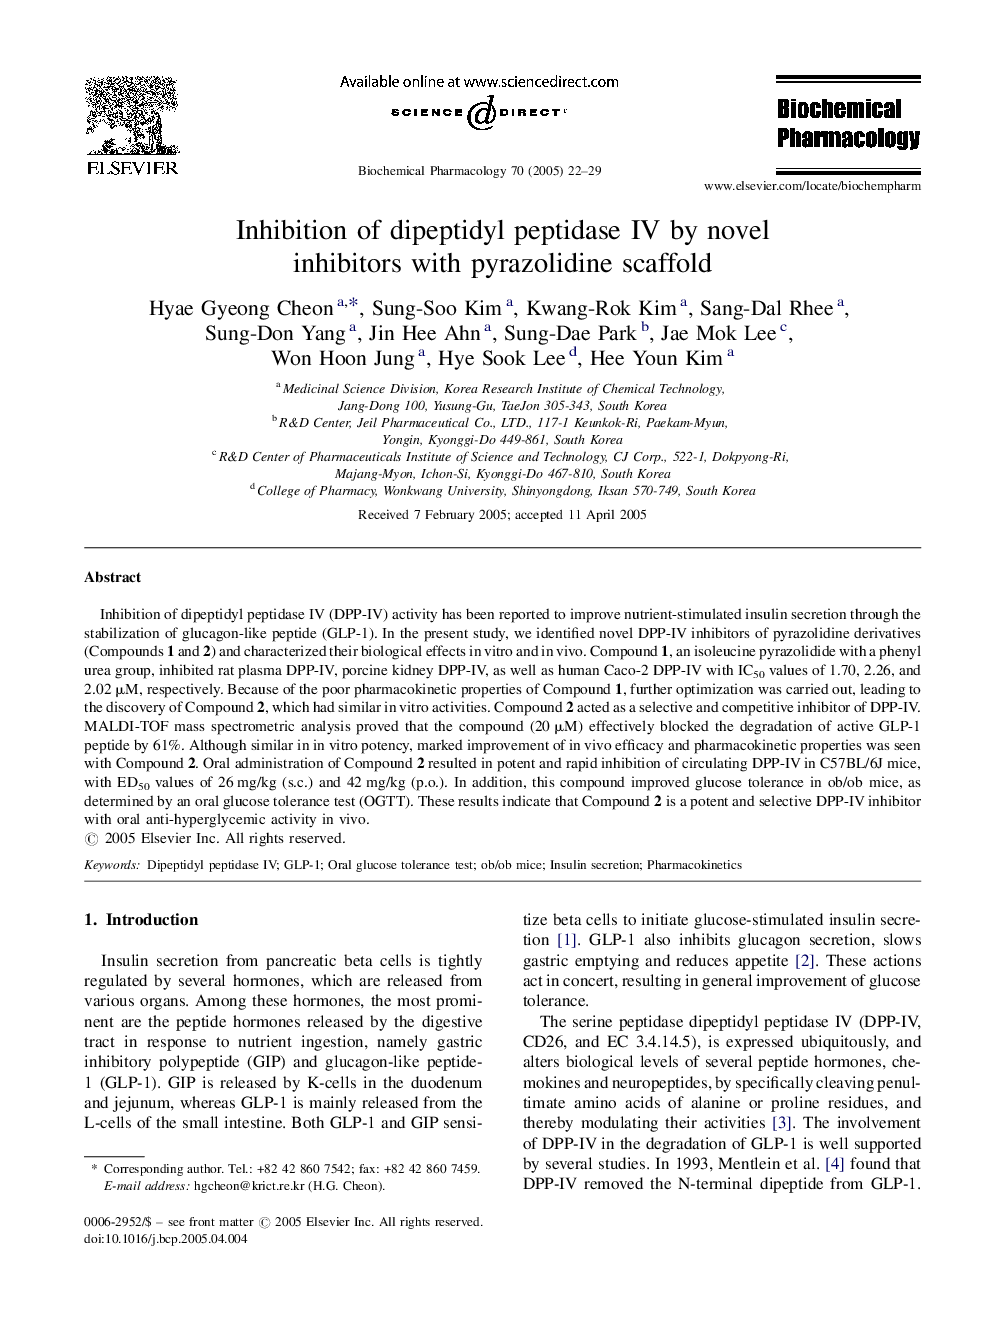 Inhibition of dipeptidyl peptidase IV by novel inhibitors with pyrazolidine scaffold